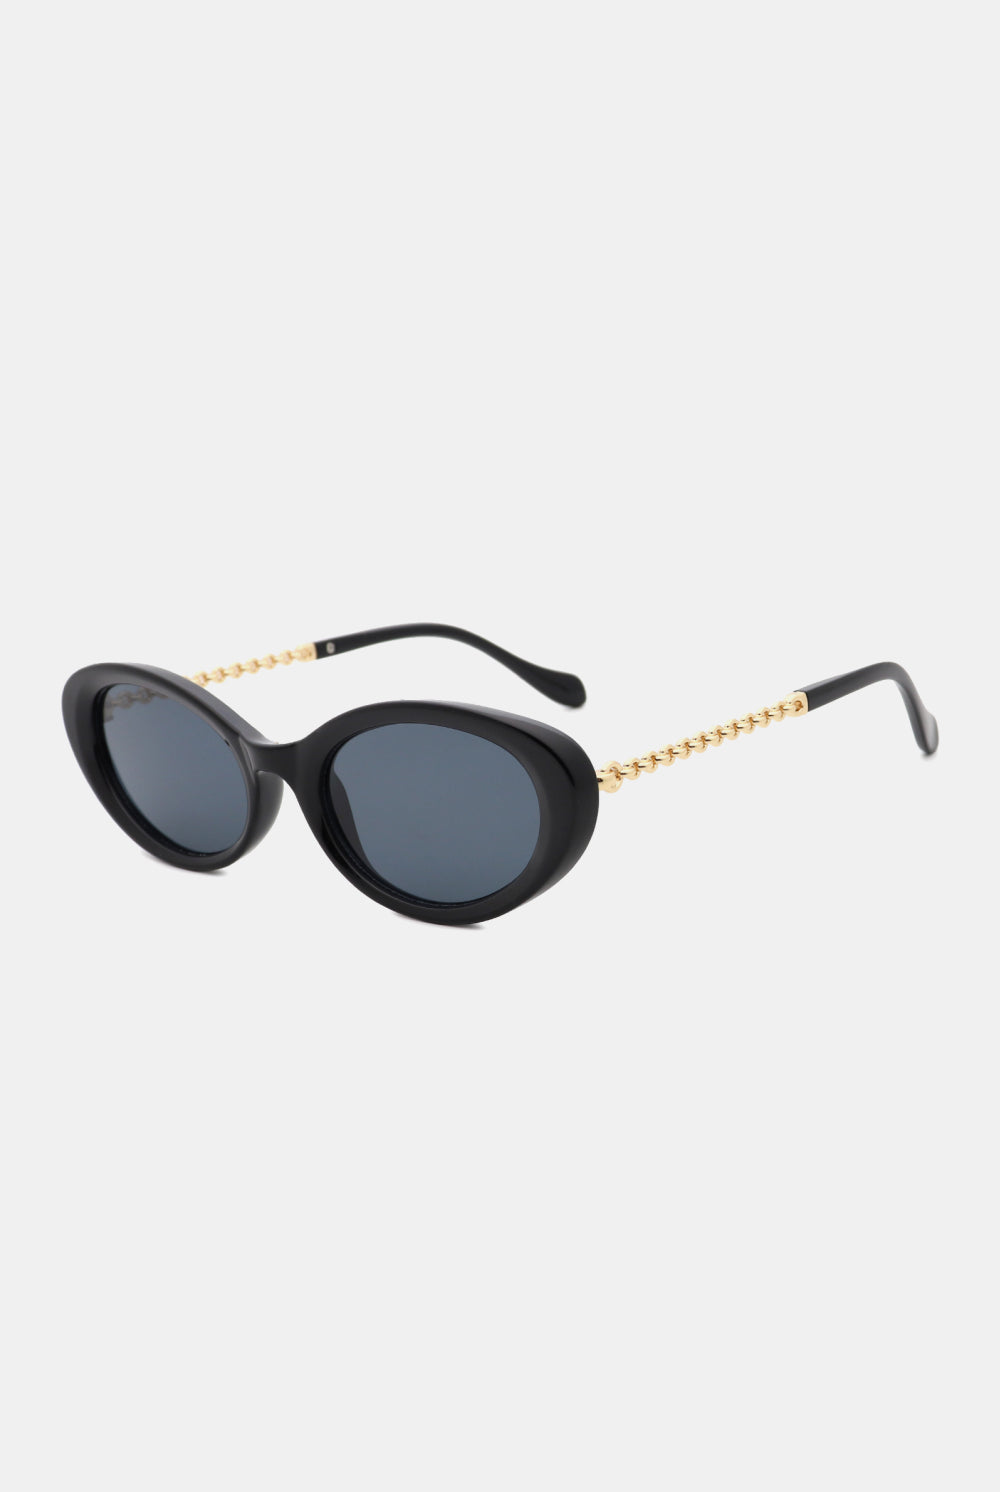 Polycarbonate Frame Cat-Eye Sunglasses - GemThreads Boutique Polycarbonate Frame Cat-Eye Sunglasses